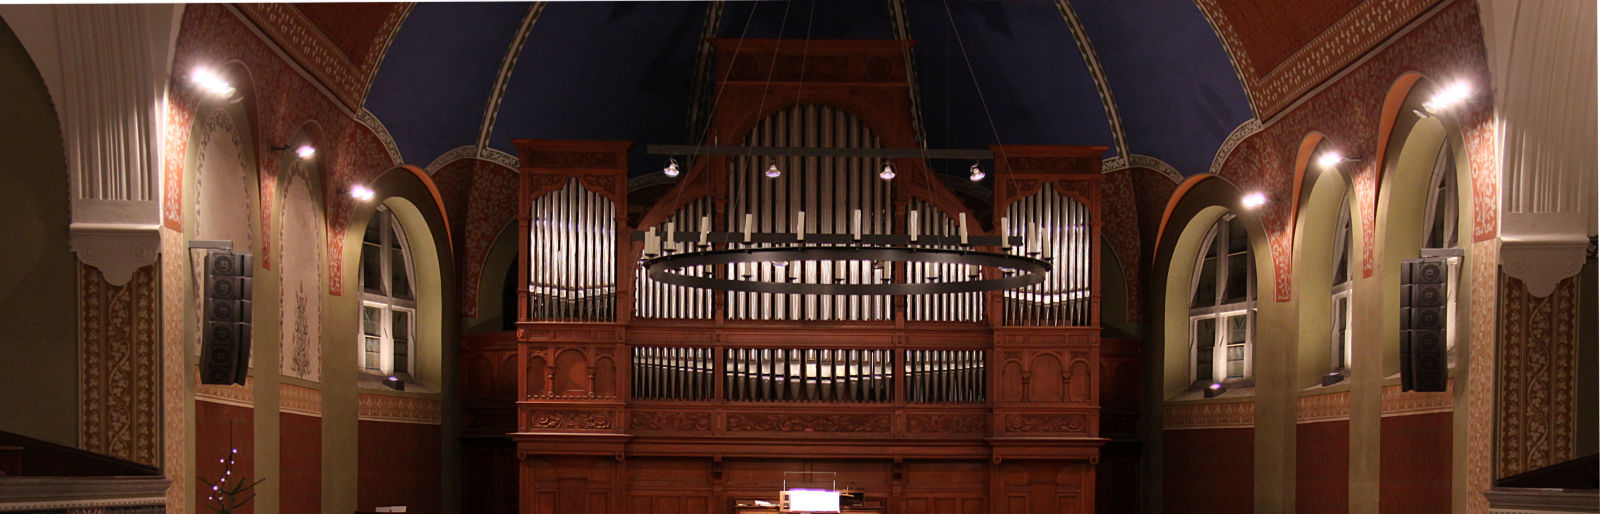 Citykirche_Orgel